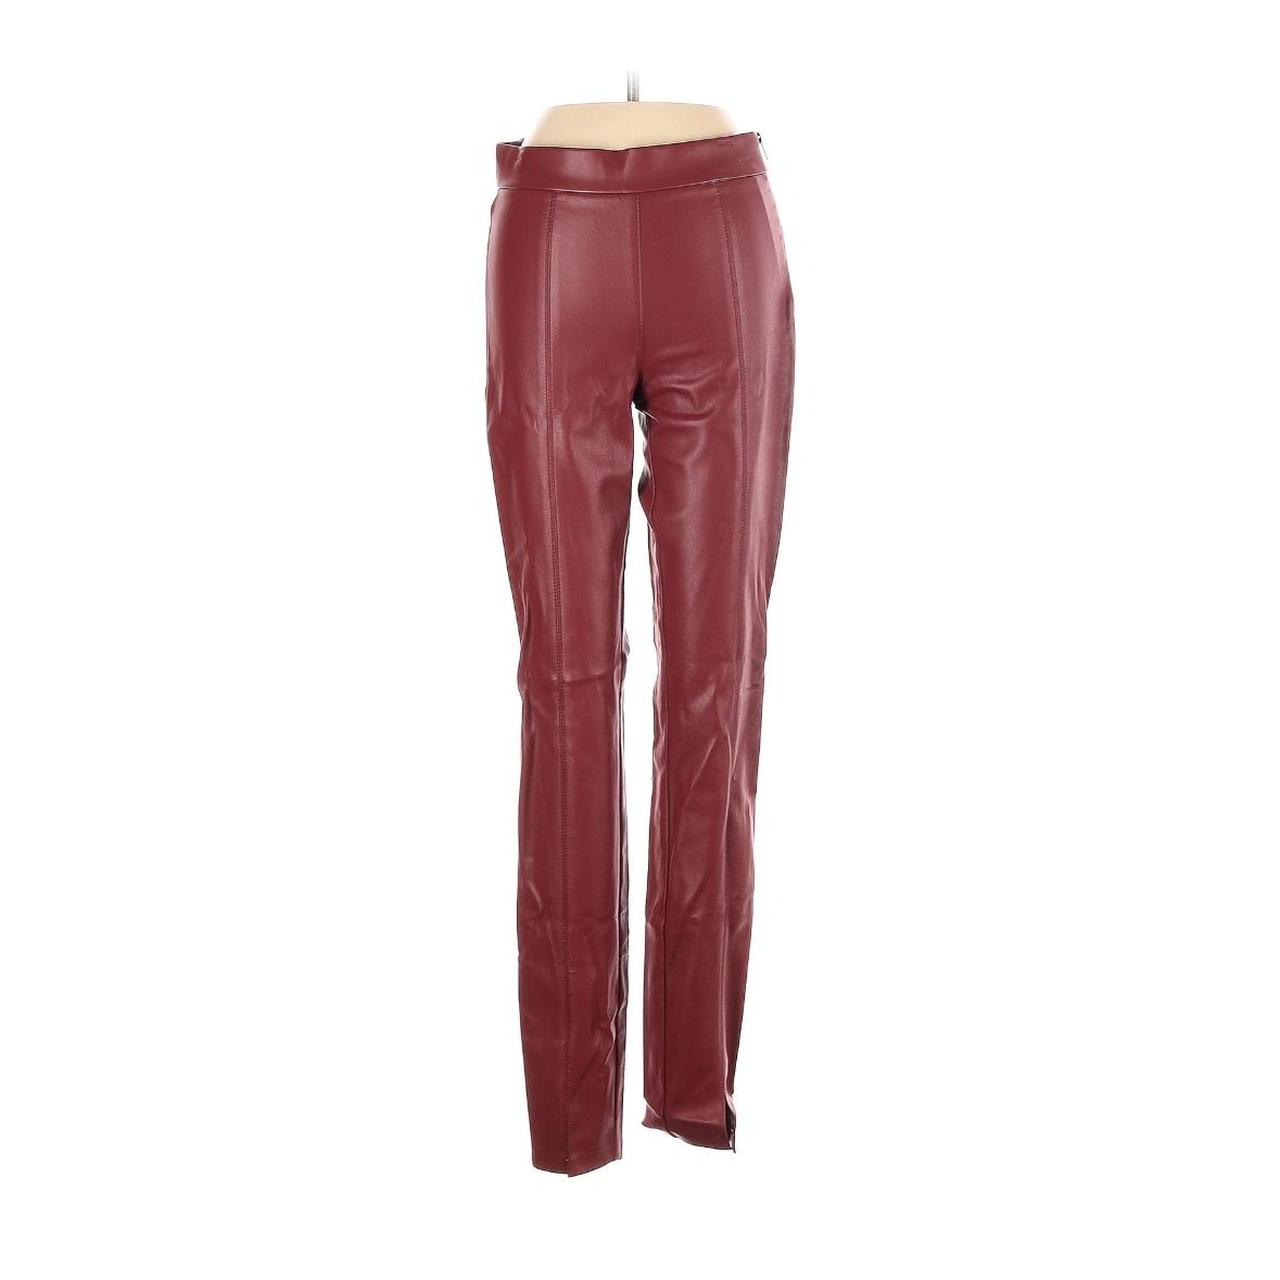 Zara | Pants & Jumpsuits | Nwt Zara Flowy Full Length Satin Pants Burgundy  | Poshmark